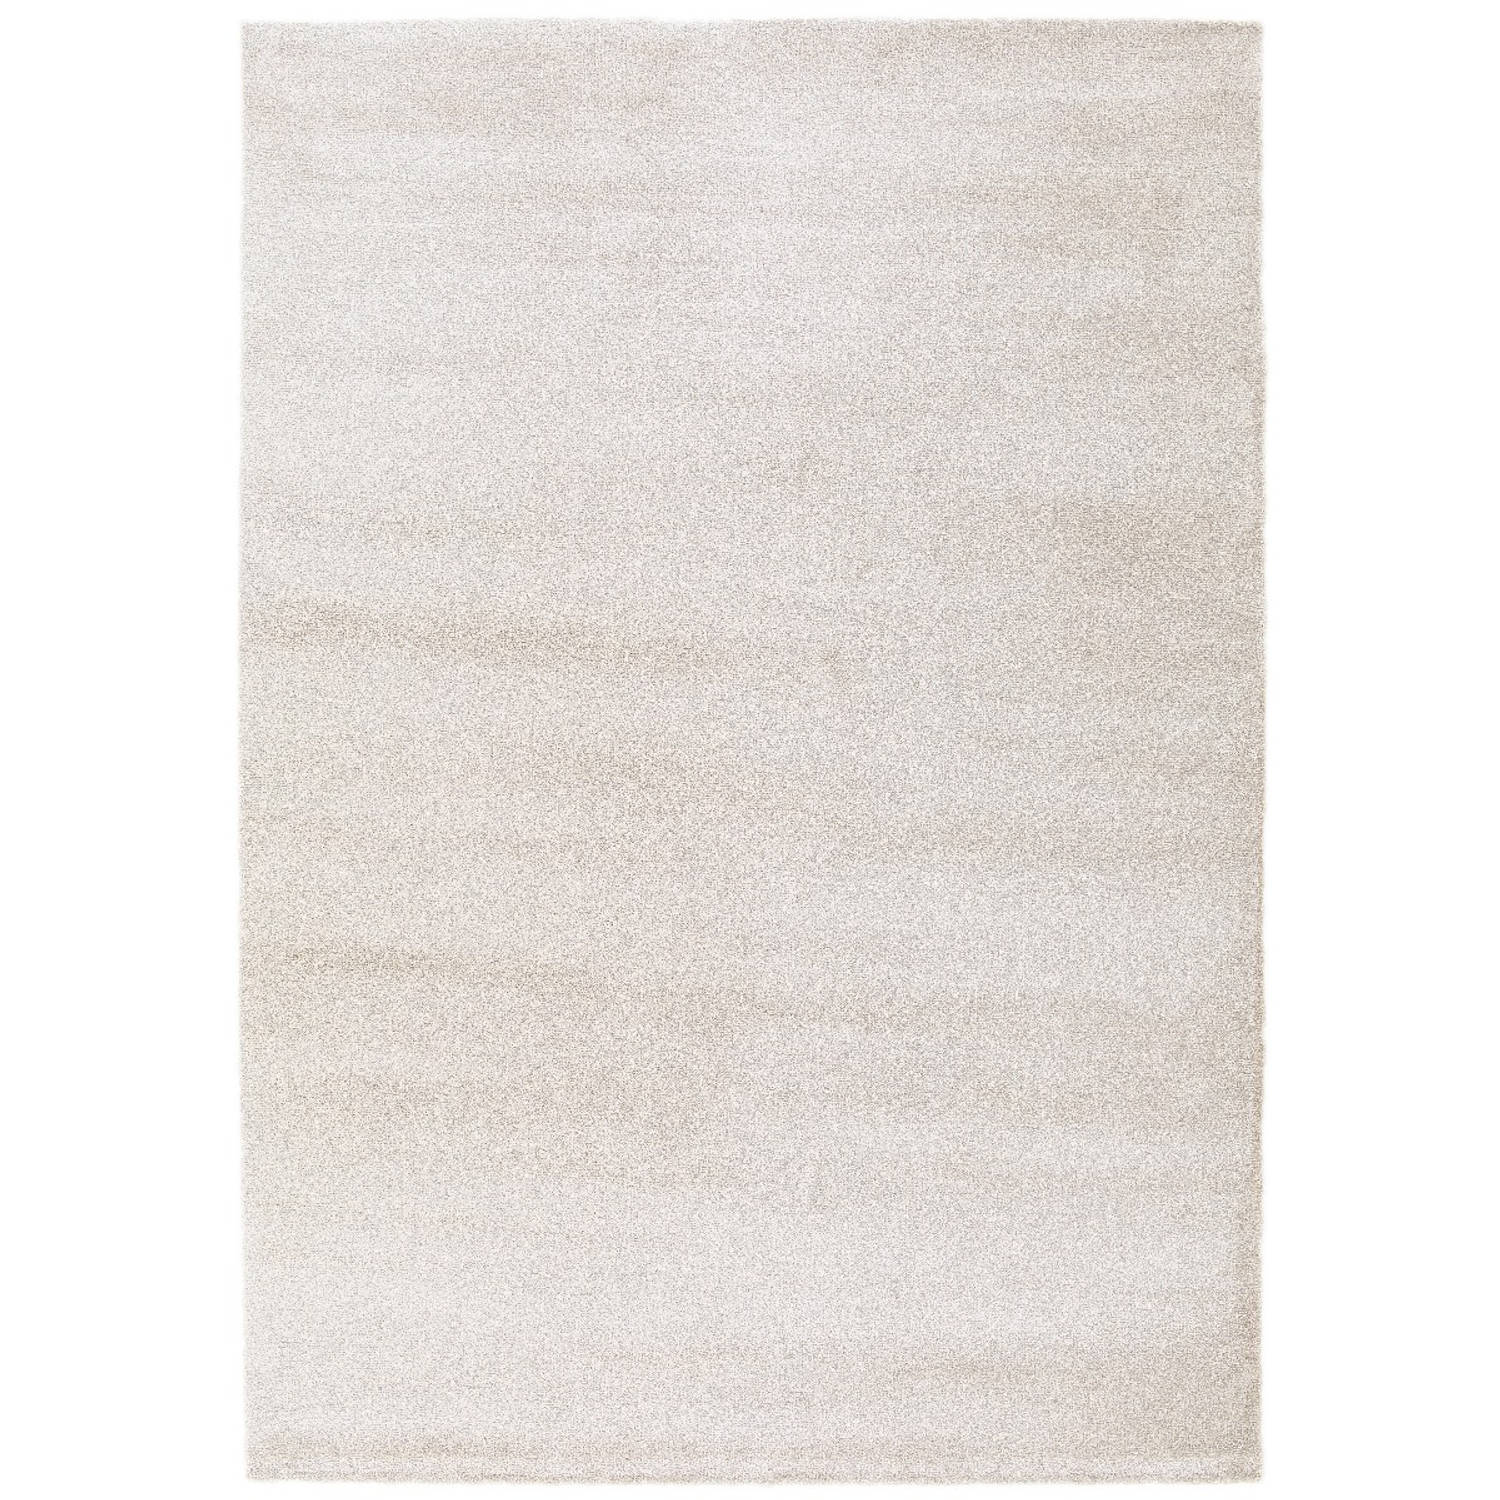 Vloerkleed Glymm Wit/Beige Wasbaar - Interieur05 - Polyester - 140 x 200 cm - (S)